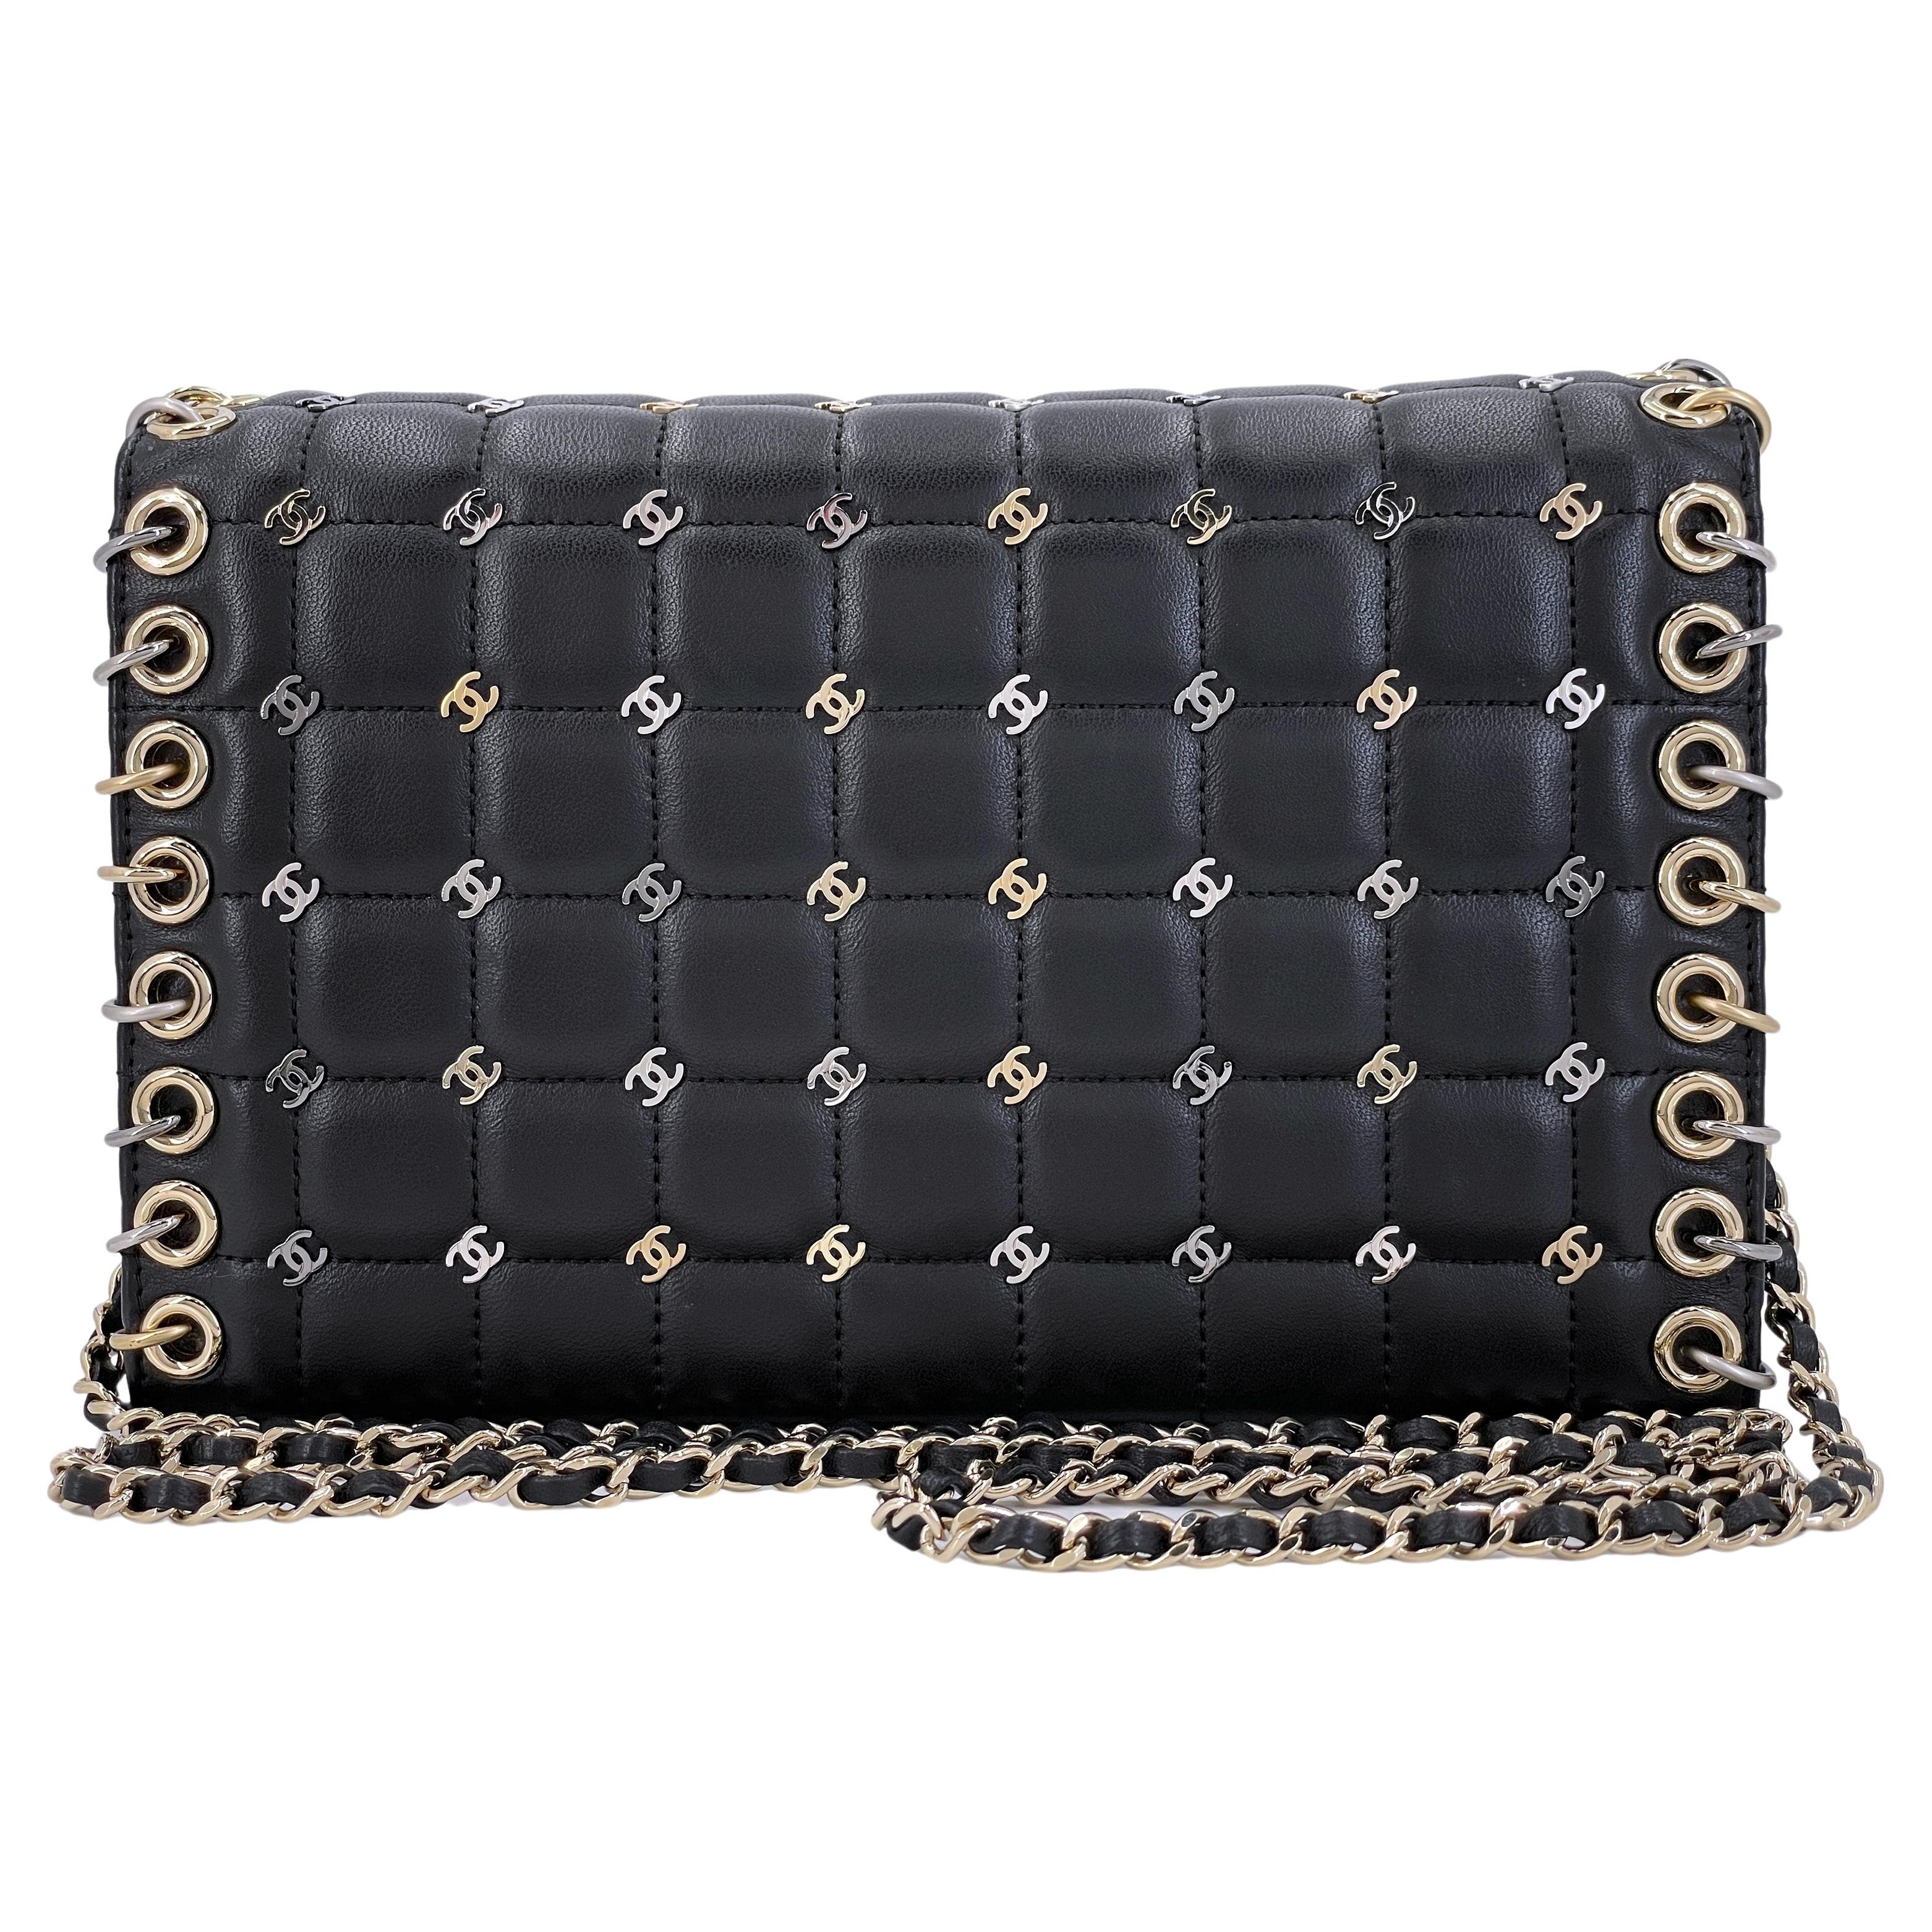 Pristine Chanel 16B Punk CC-Studded Piercing Clutch on Chain Bag Black 67544 For Sale